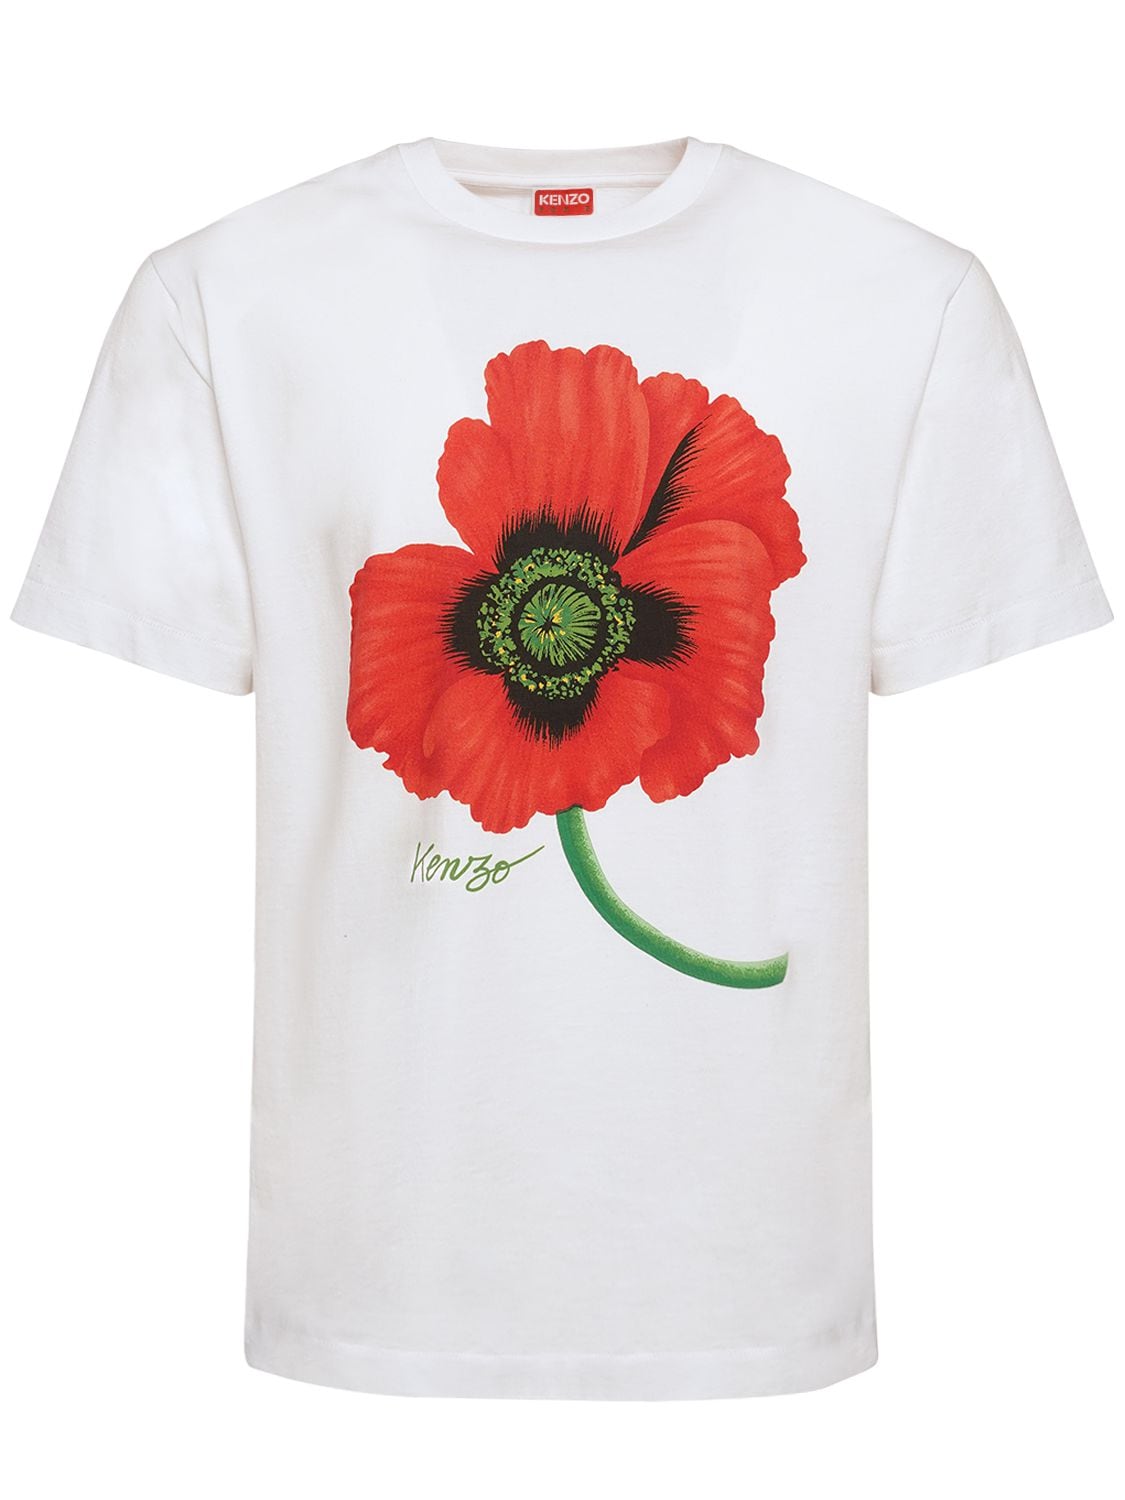 KENZO PARIS Poppy Print Cotton Jersey T-shirt